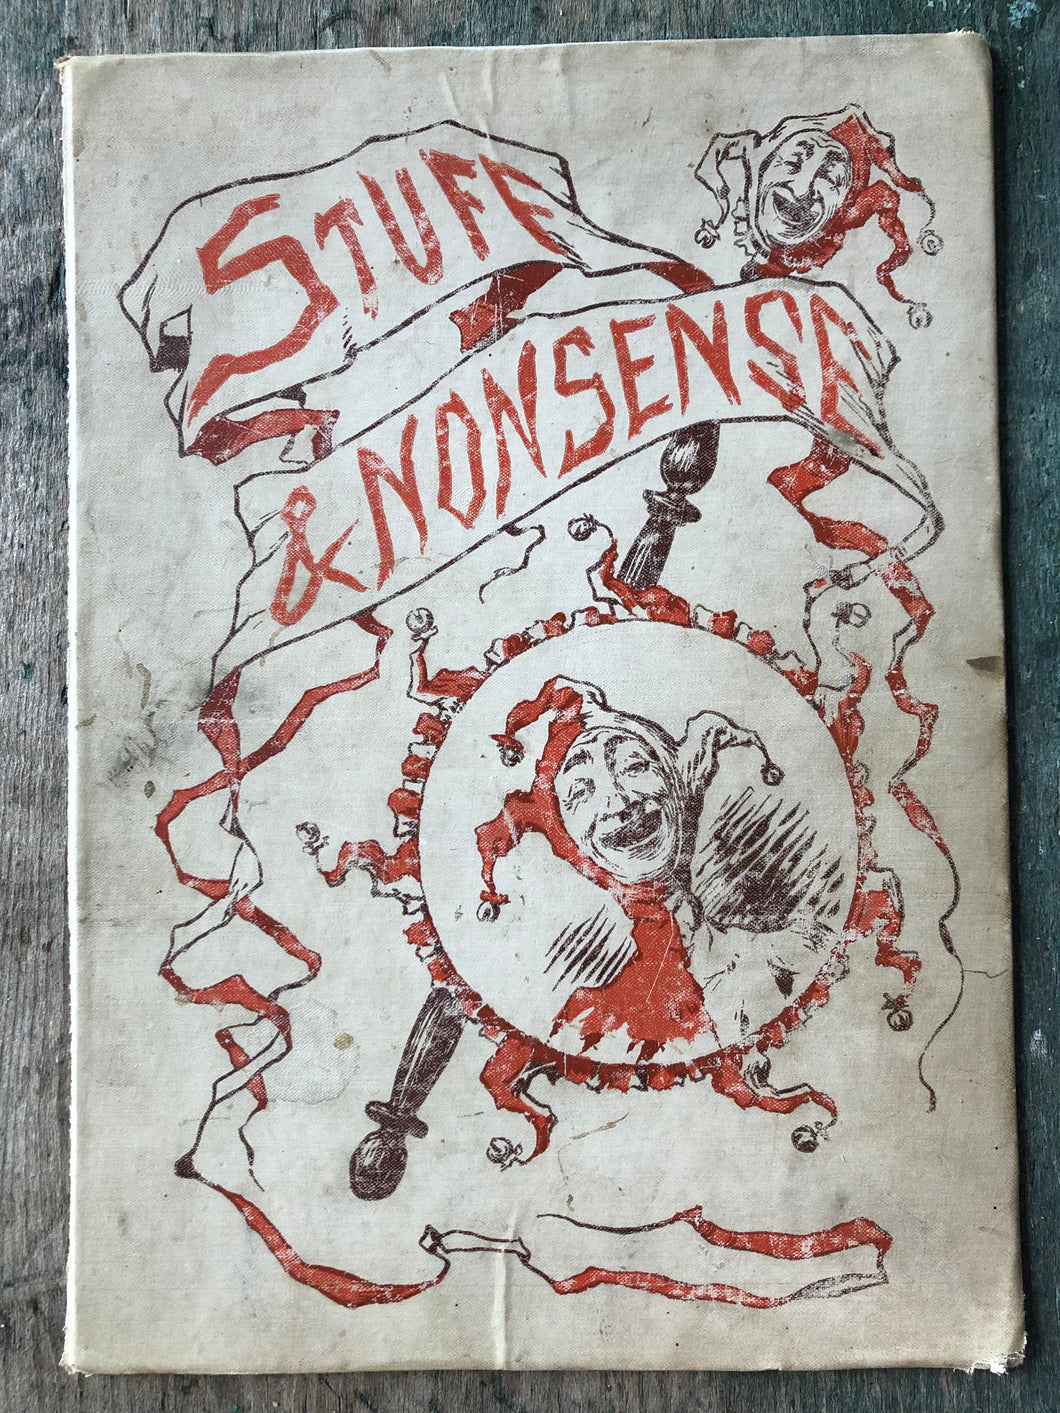 Cover of “Stuff & Nonsense”